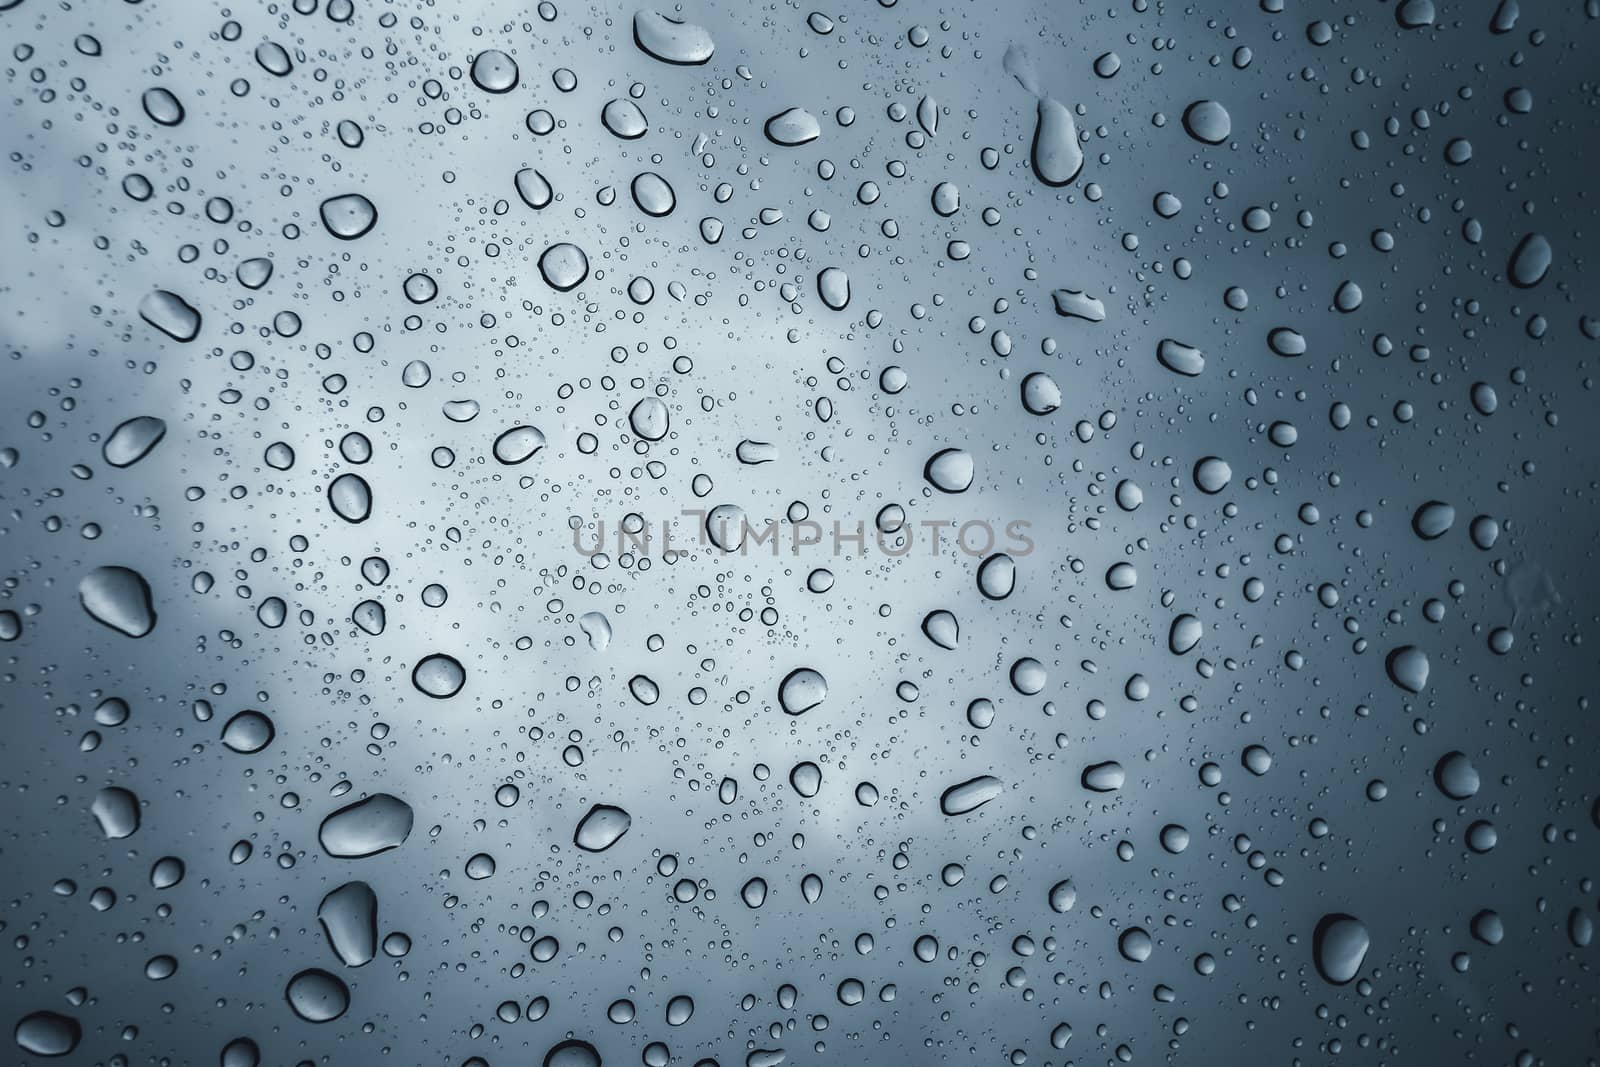 raindrops on glass by winnond